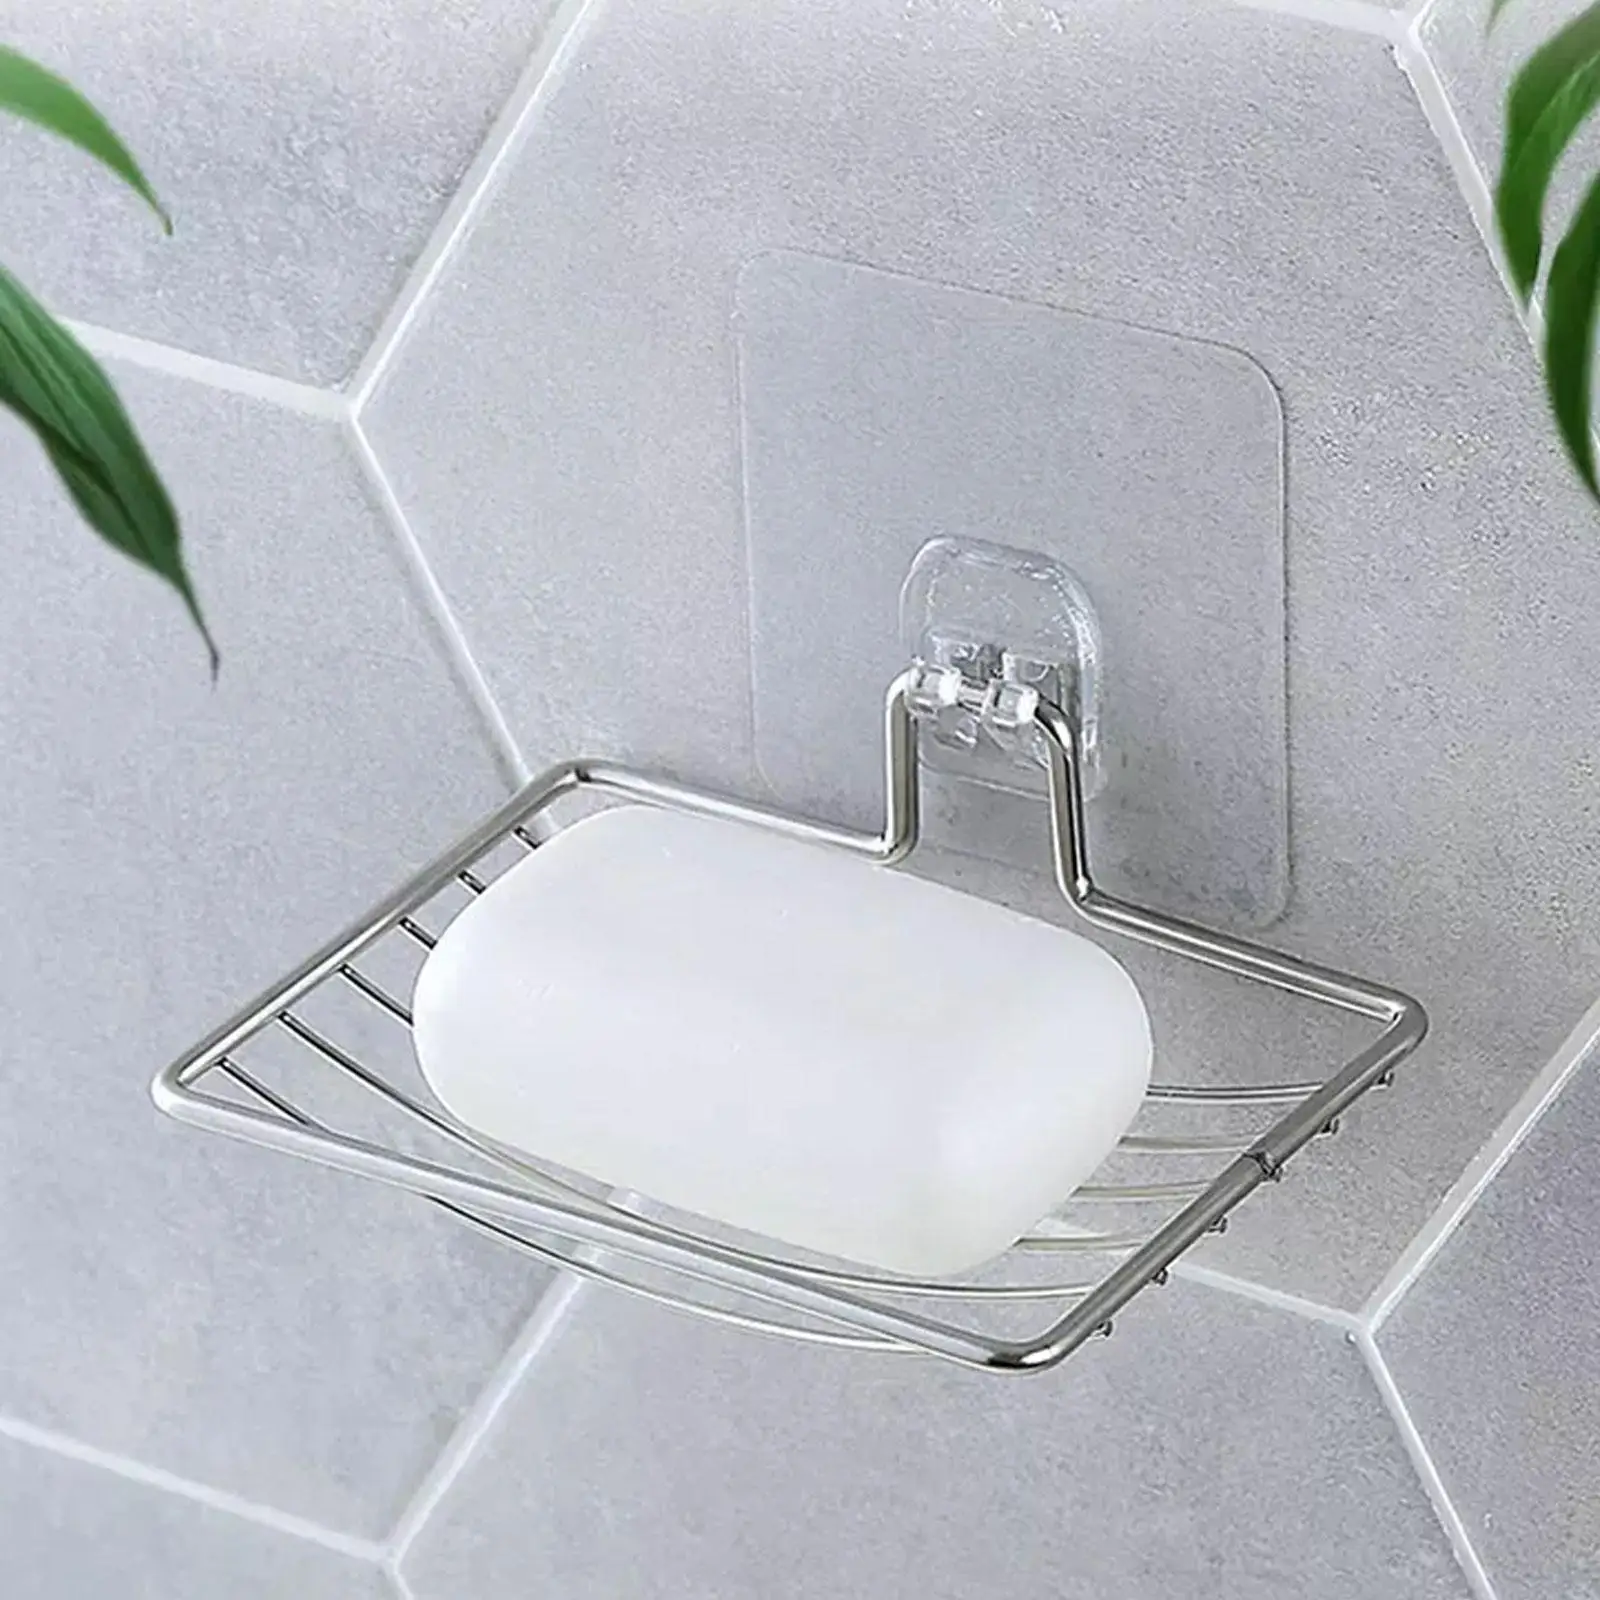 

Steel Wall Mounted Soap Dish Holder Soap Tray Rustproof Self Adhesive Bar Soap Sponge Drain Holder For Shower Bathroom E2I0